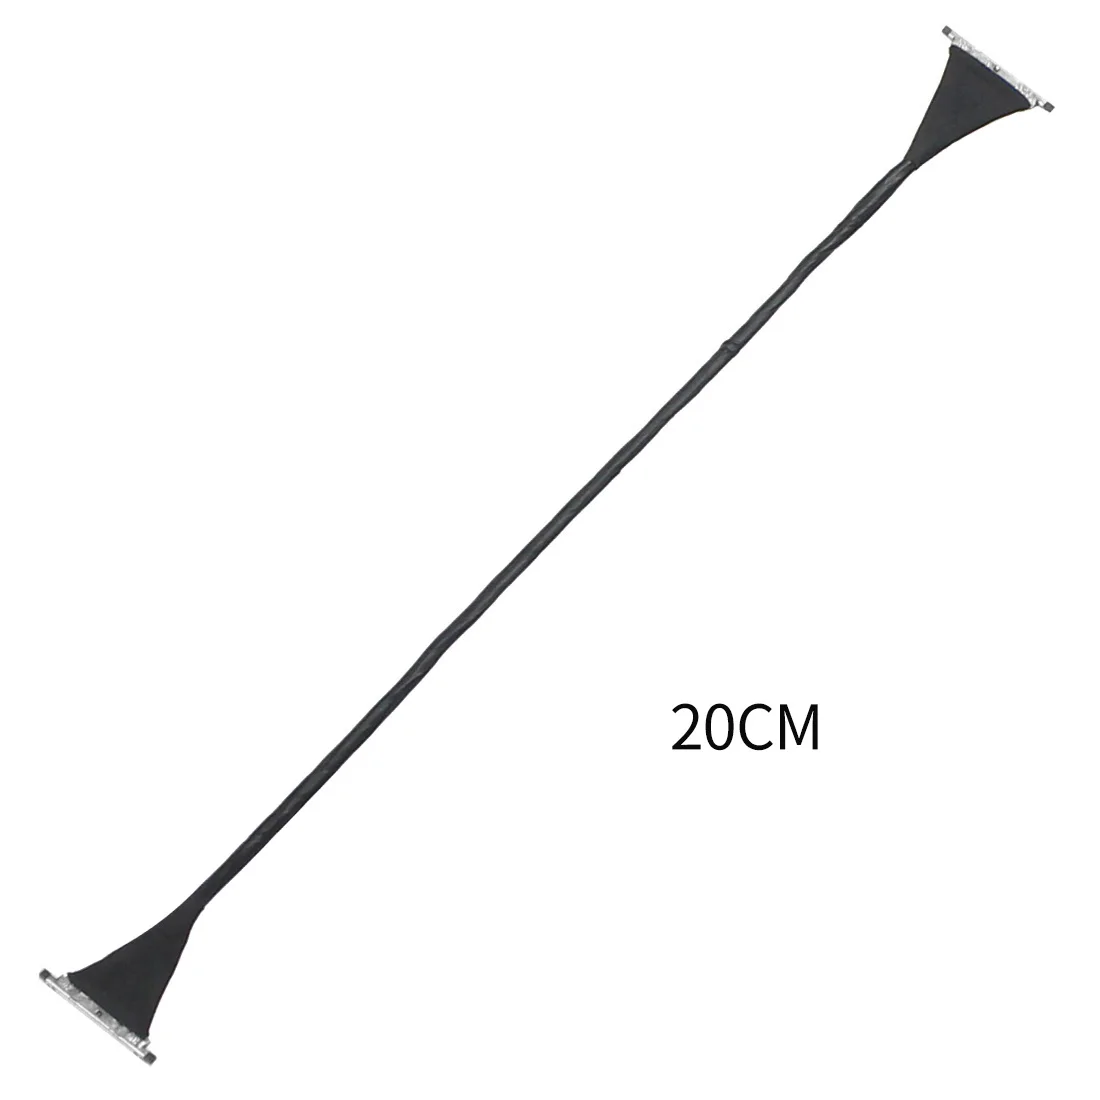 Coaxial 20cm Cable for Caddx Vista